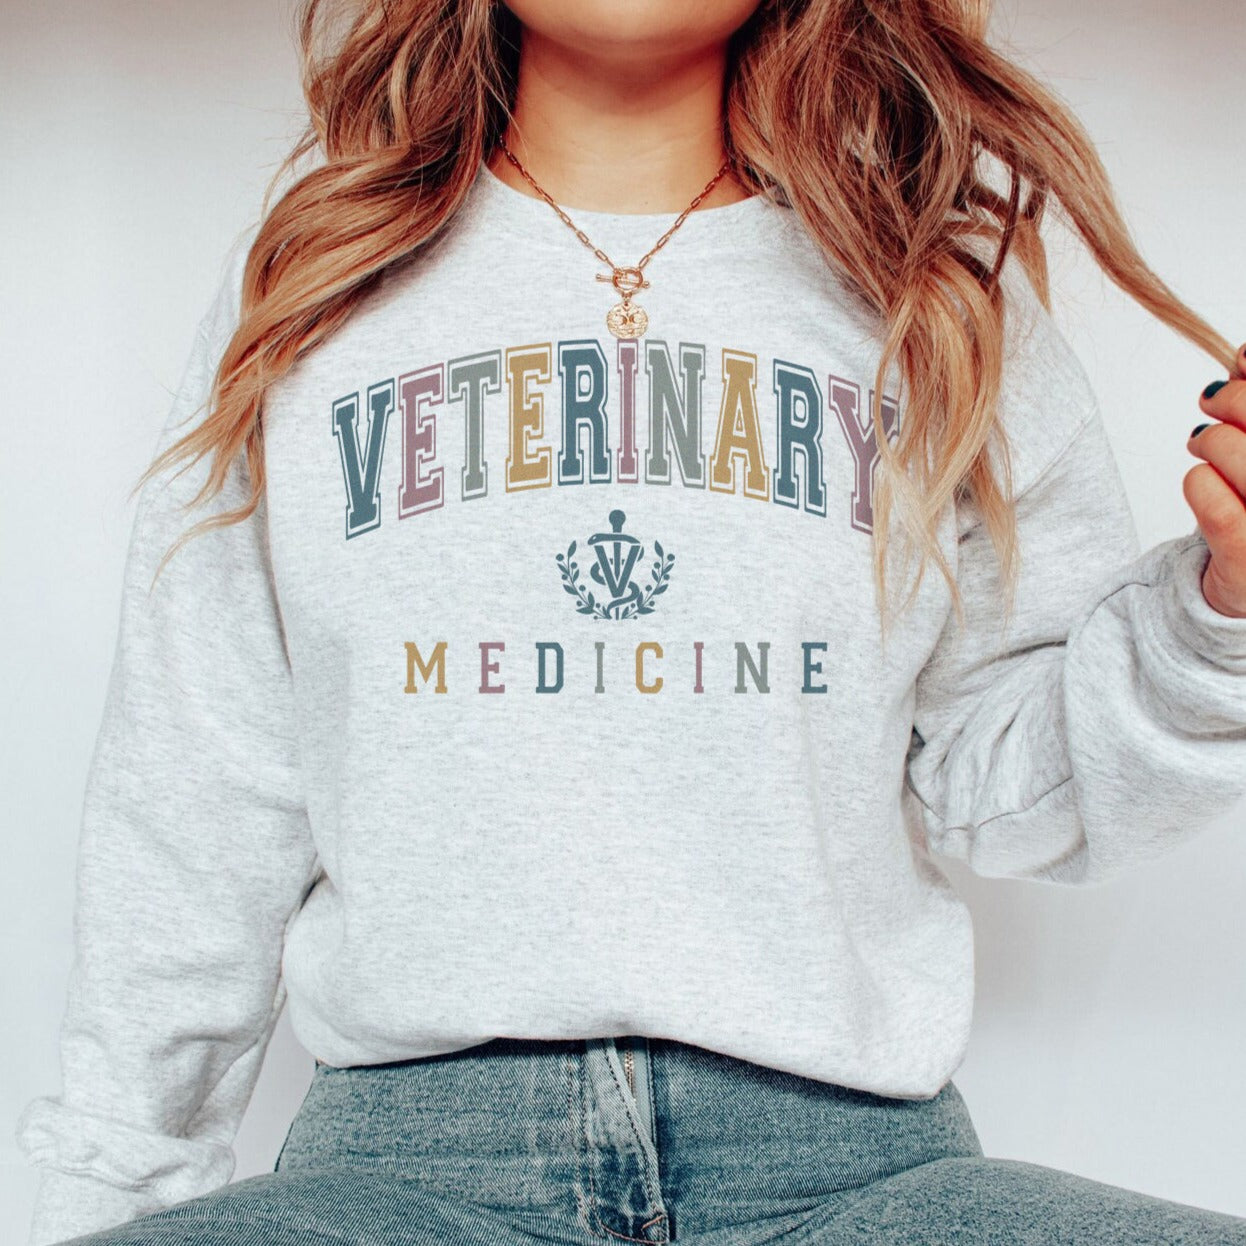 Colorful Varsity Veterinary Medicine Sweatshirt